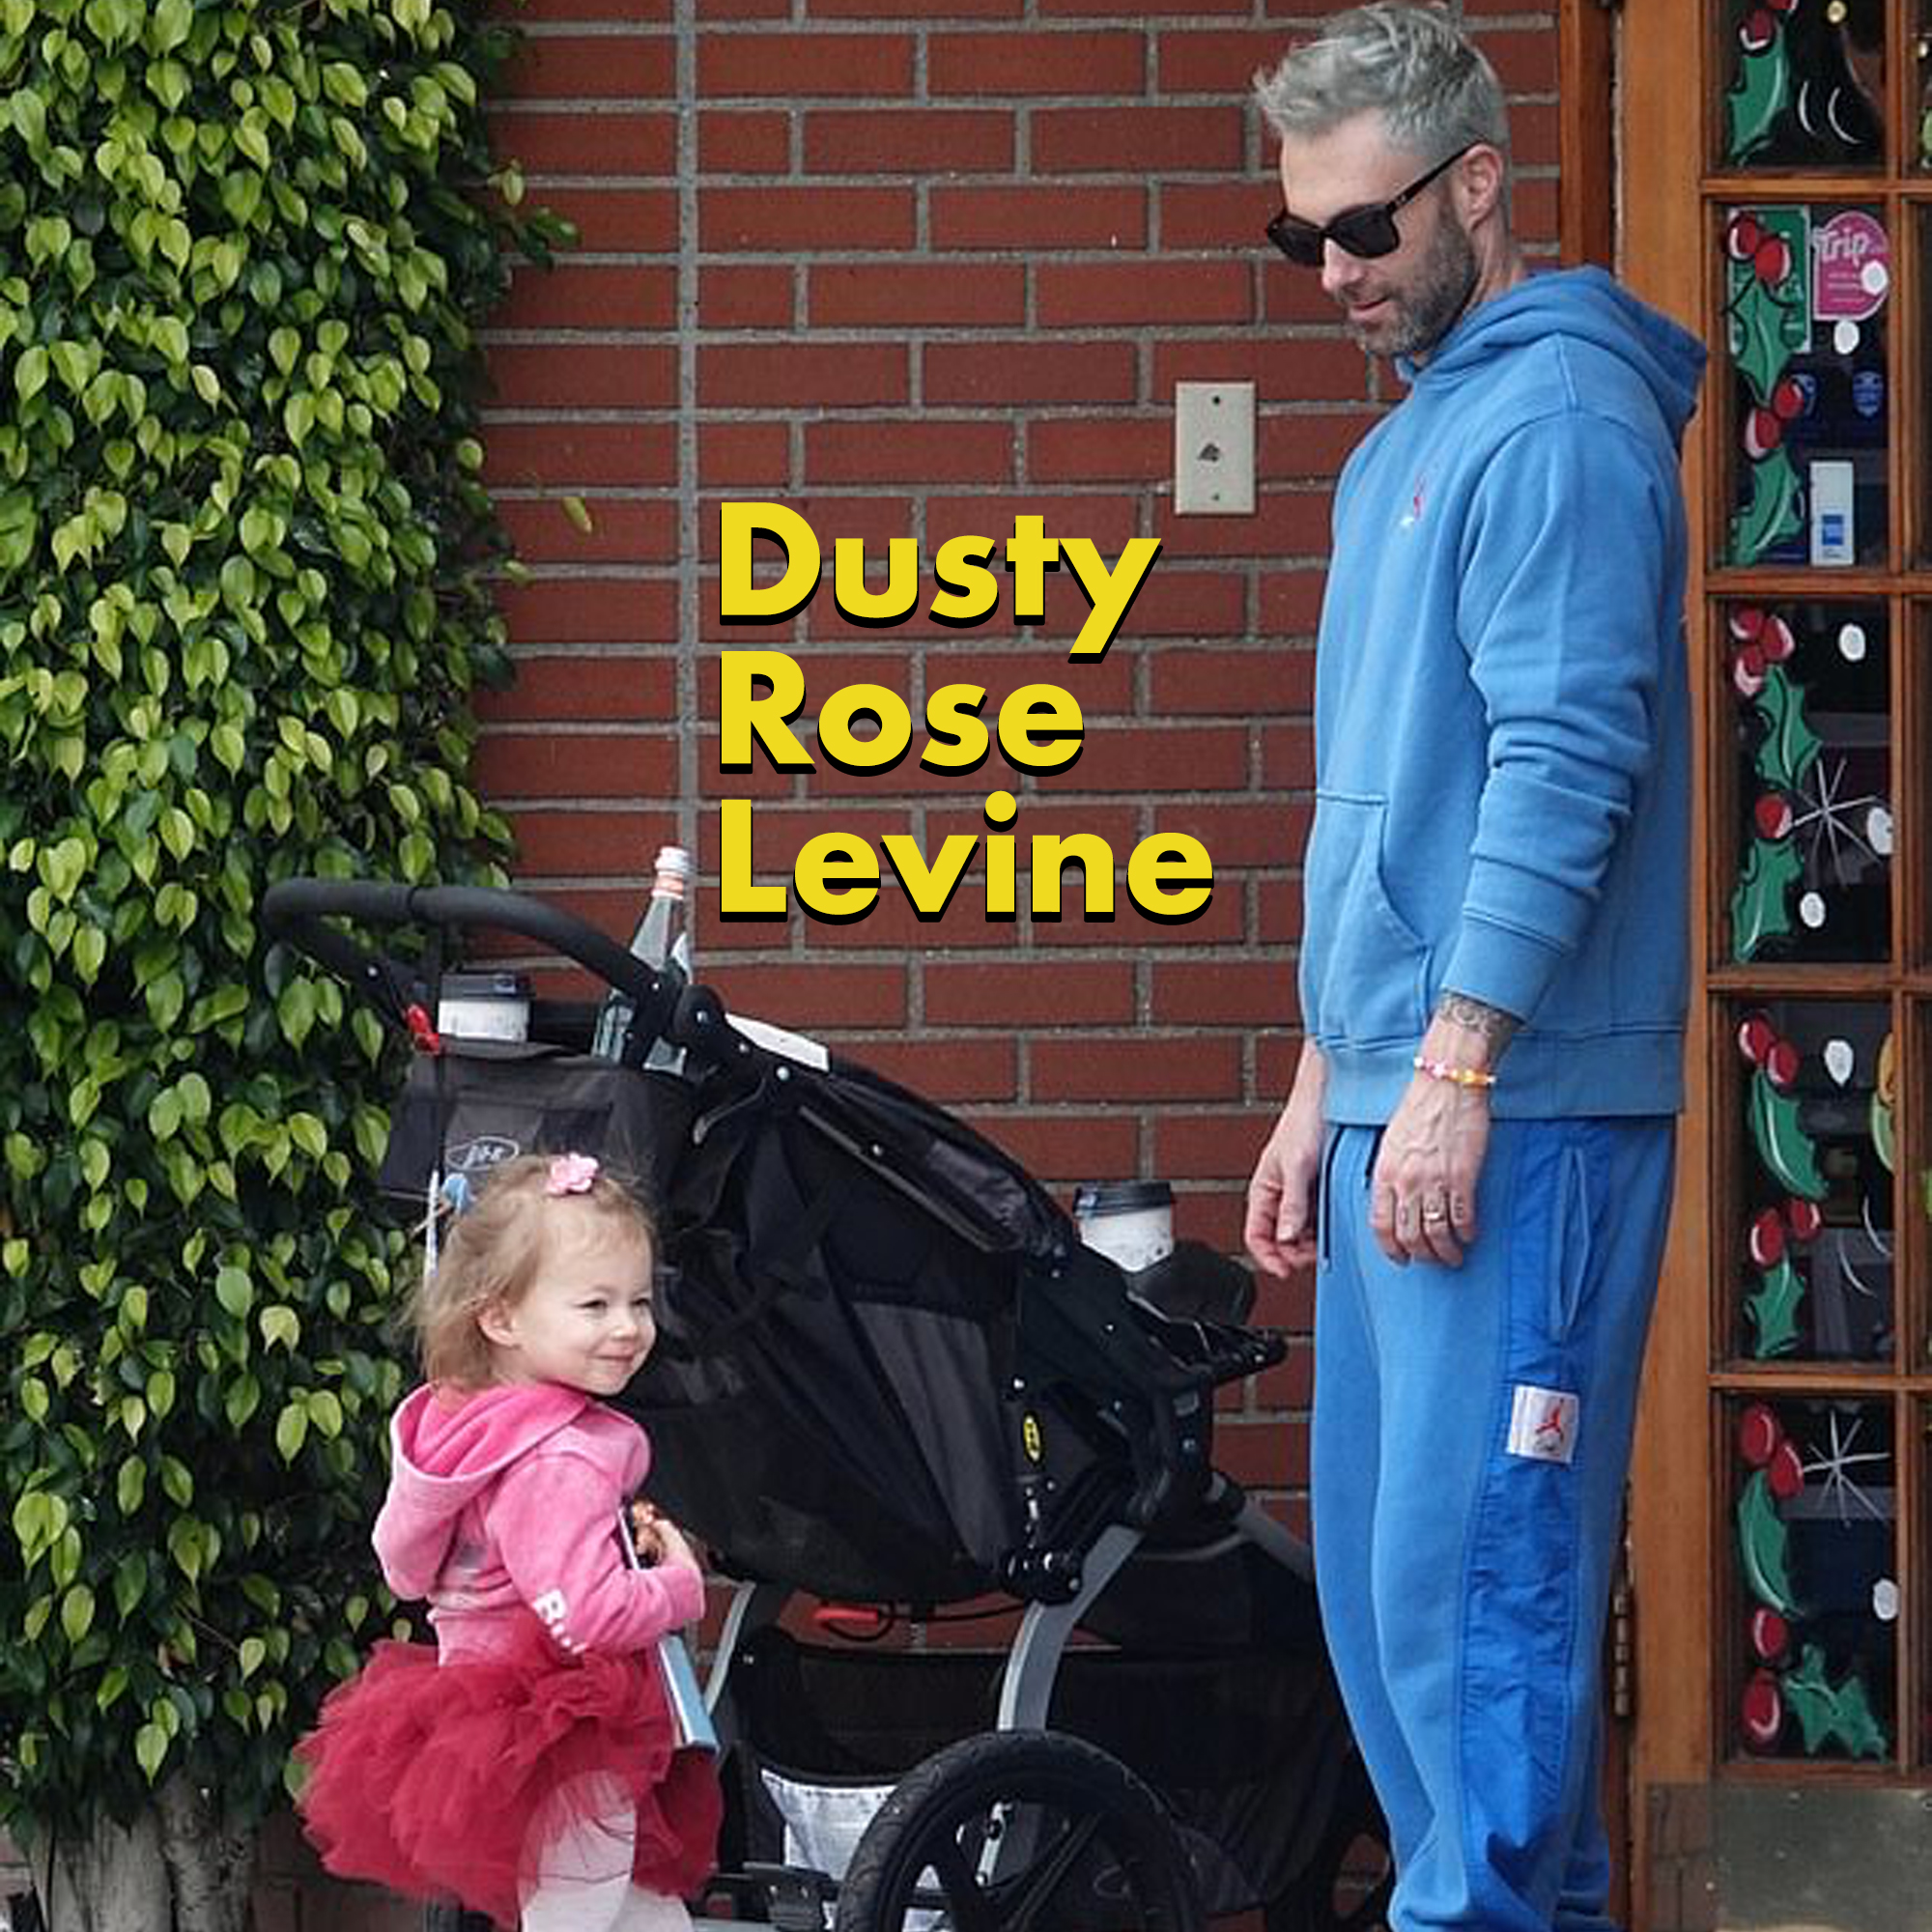 Terrible celeb baby names -adam levine daughters - Dusty Rose Levine